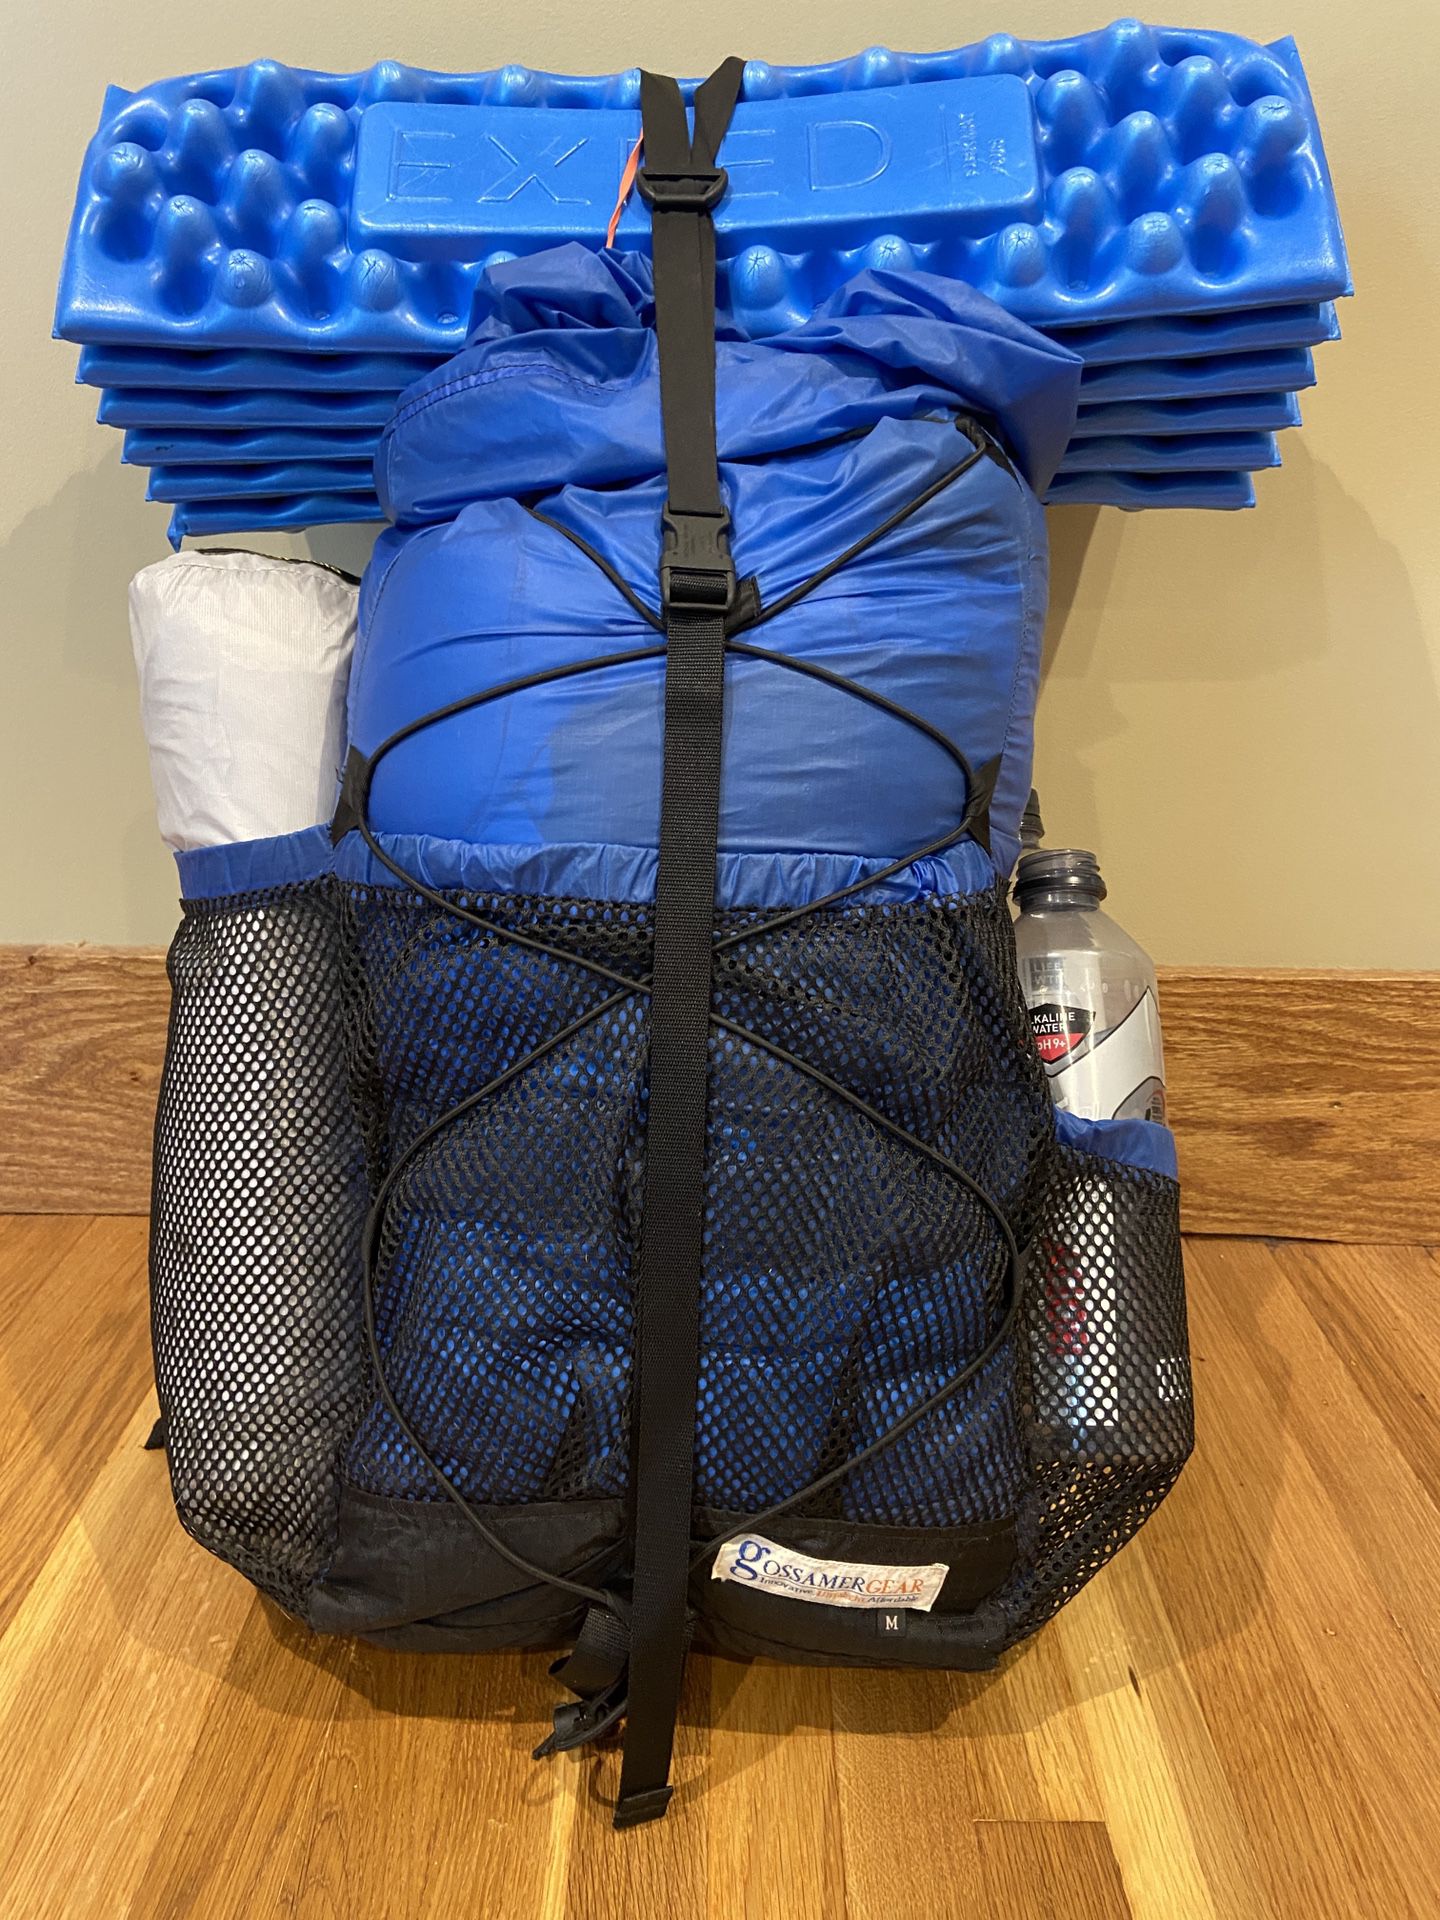 Gossamer Gear G4-20 Backpack Rei Osprey Gregory Hiking Camping